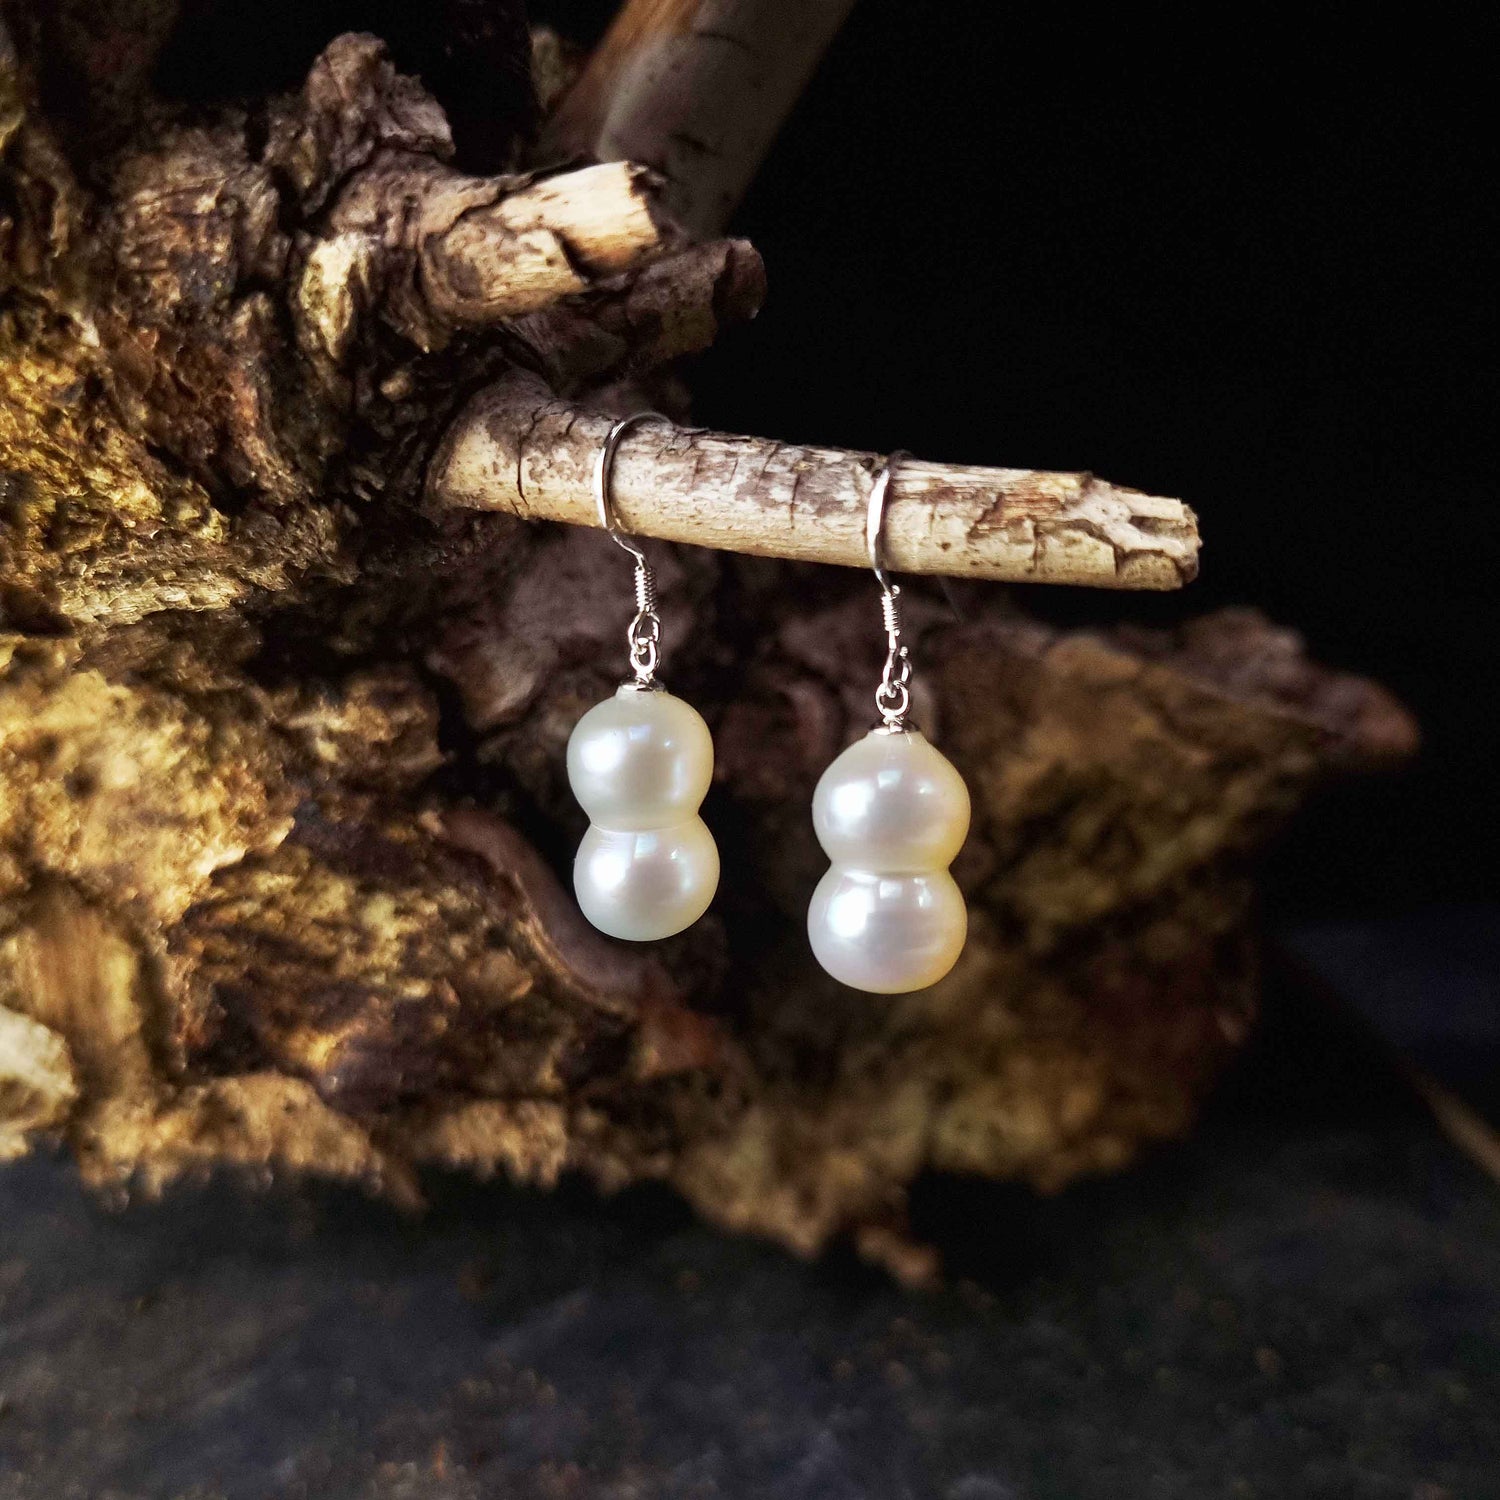 Zoetwater parel oorbellen met witte pinda parel en sterling zilver (925) hangend aan tak | Pearl Peanut